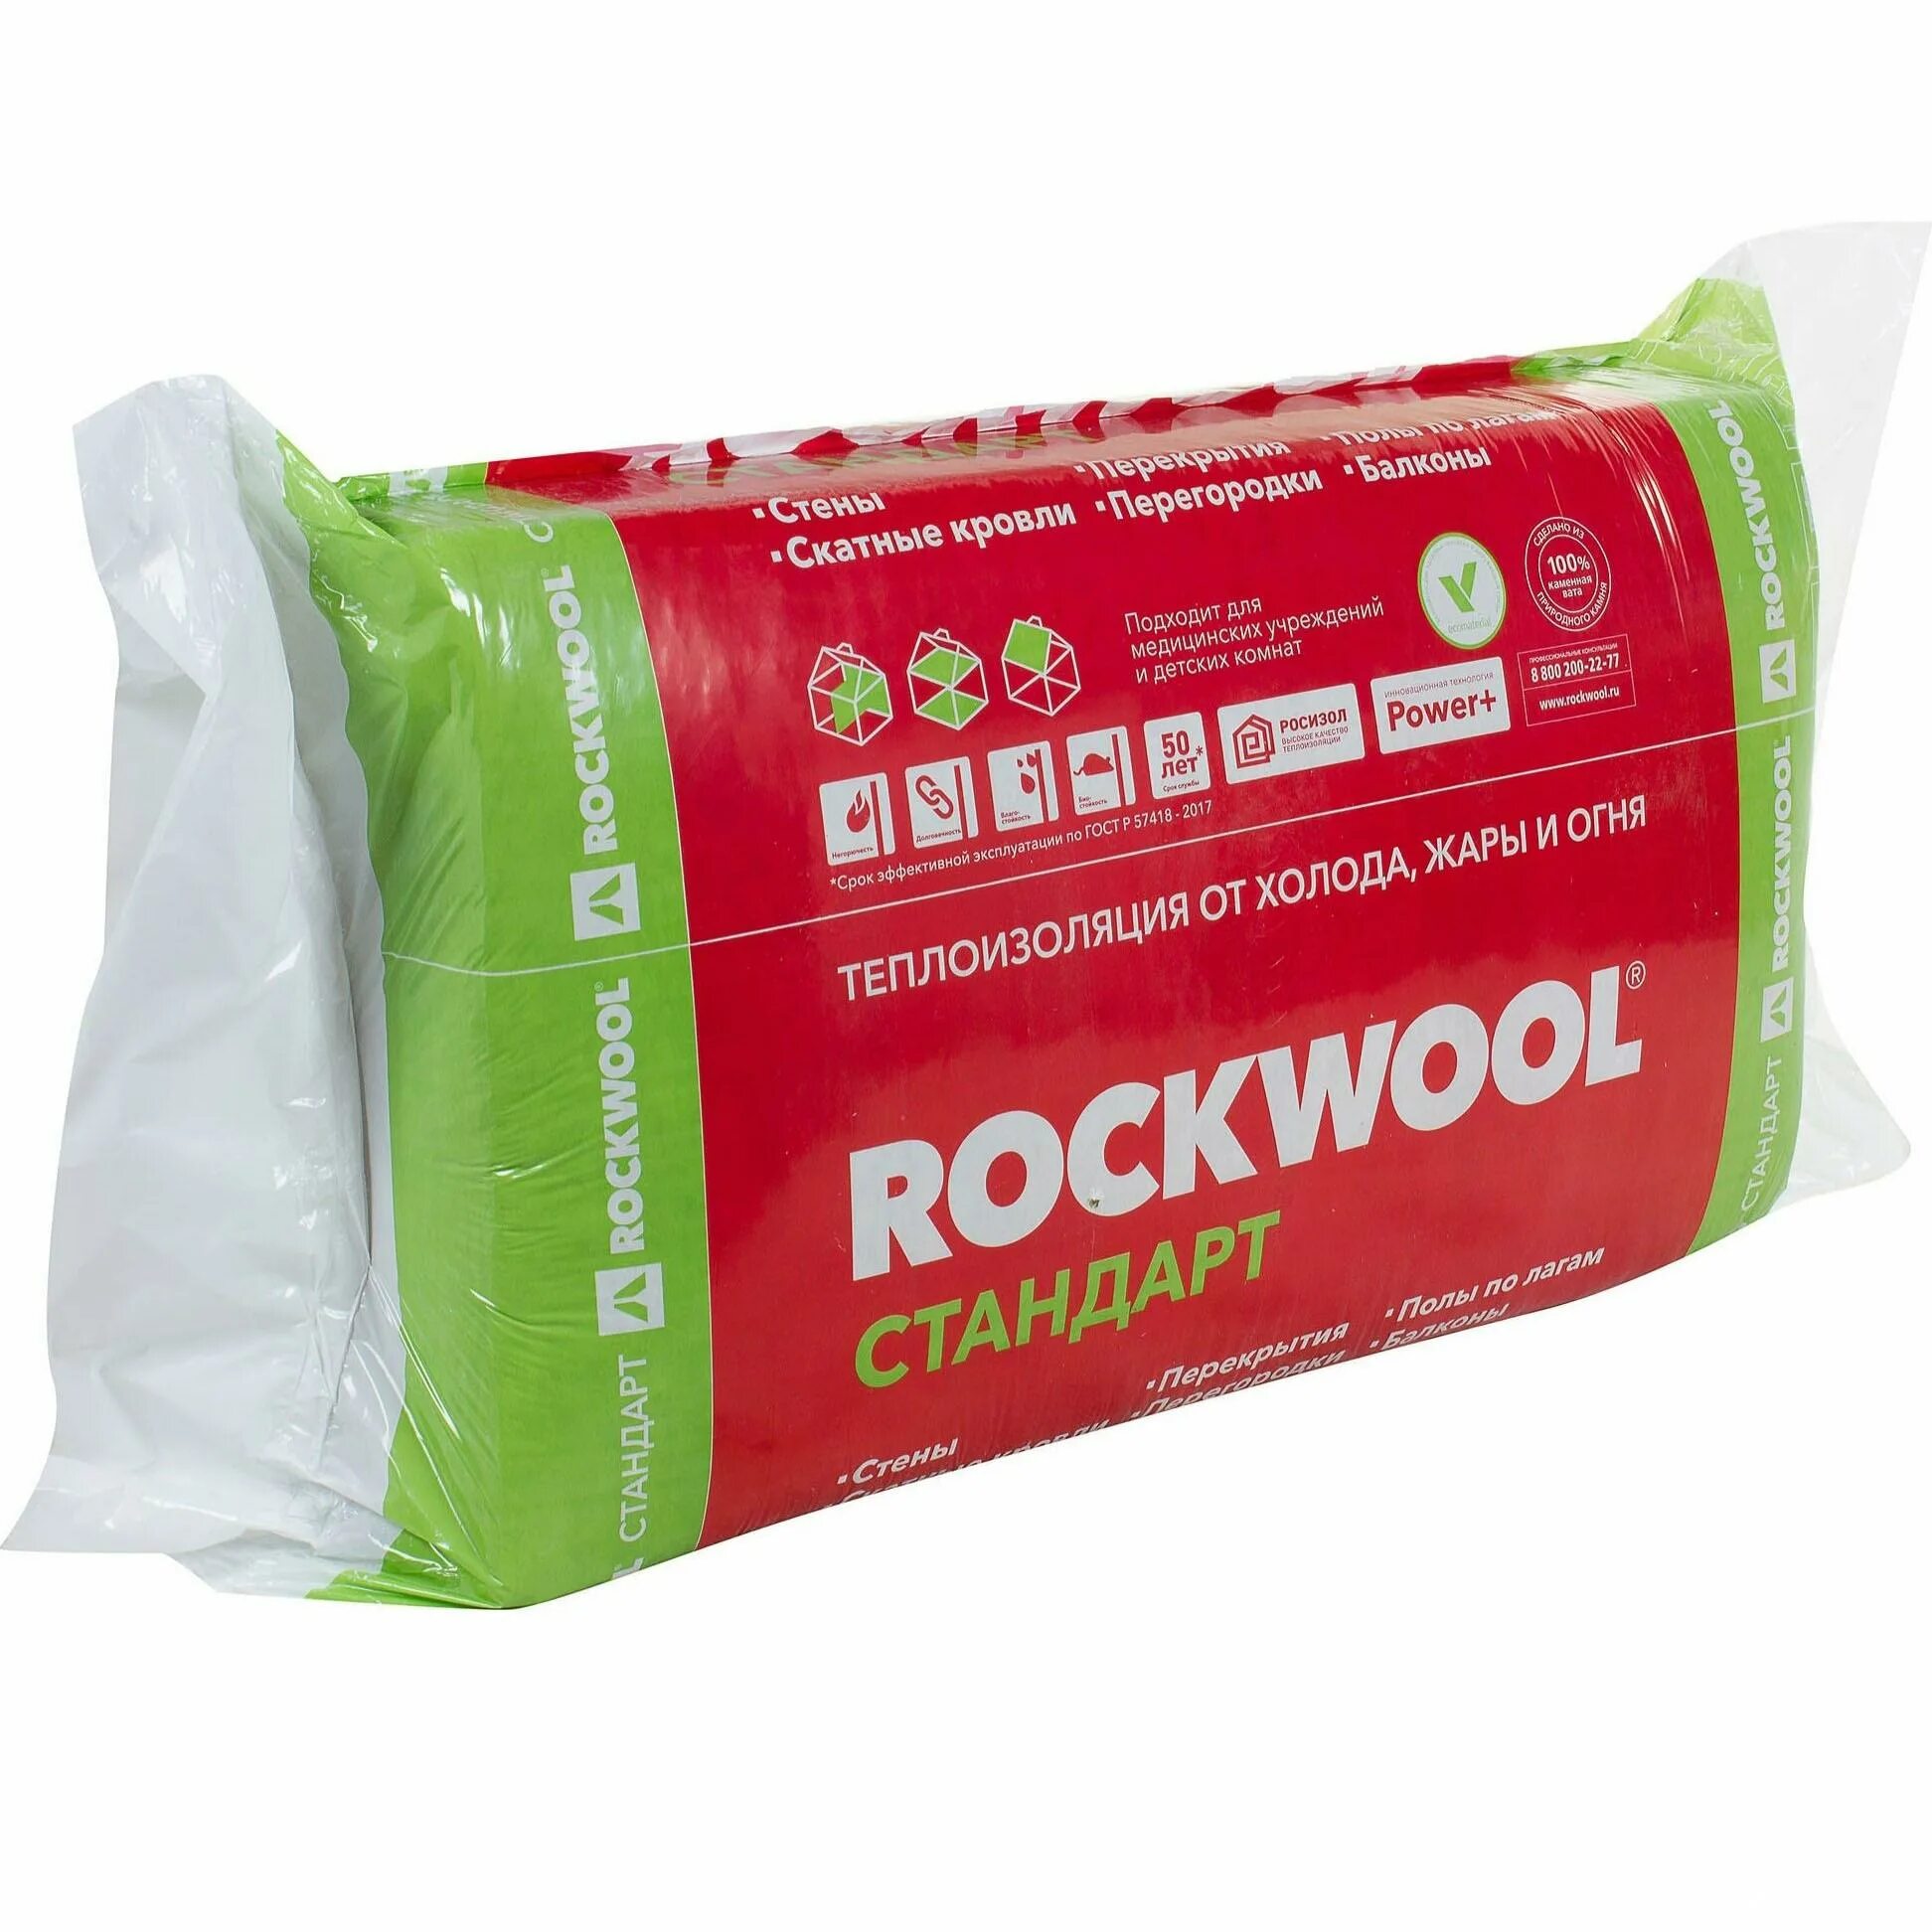 Rockwool утеплитель стандарт 1000х600х100. Каменная вата Роквел 50 мм. Роквул стандарт 50 мм. Утеплитель Роквул стандарт 50 мм 5.4 м².